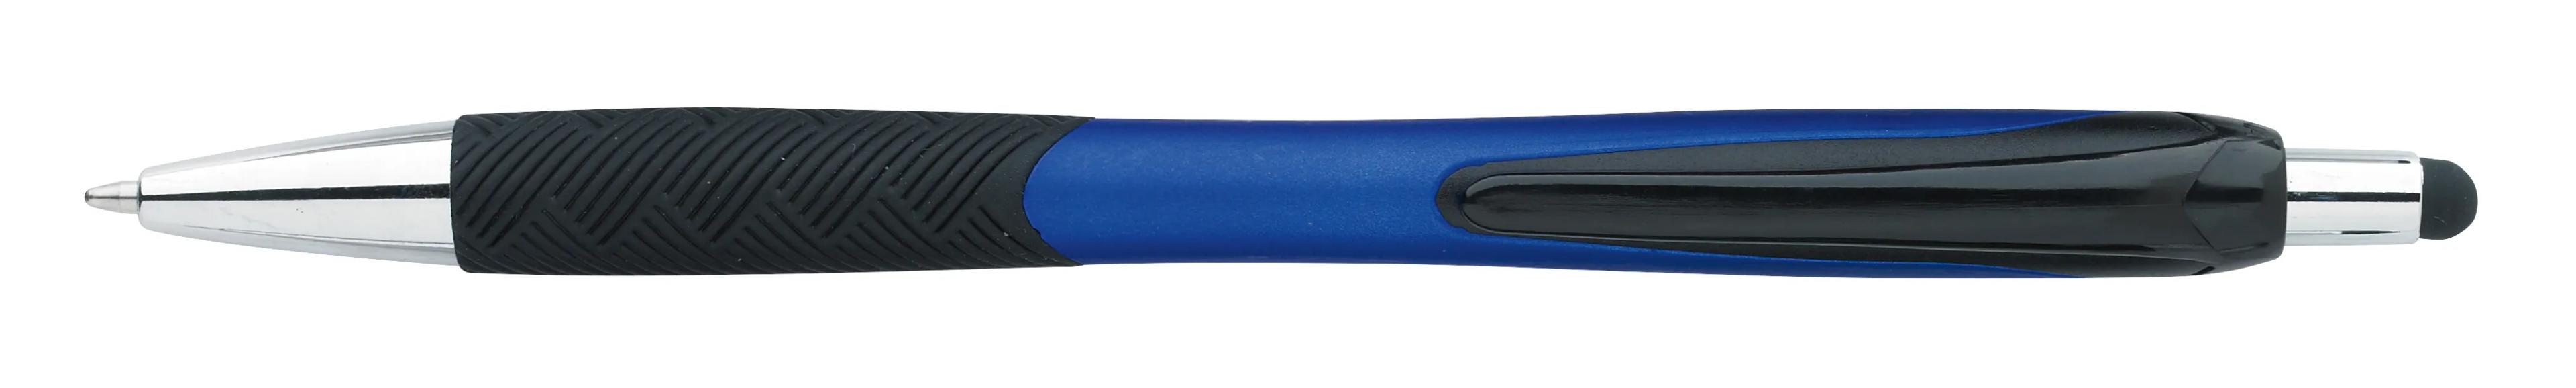 Metallic Pattern Grip Stylus Pen 5 of 37